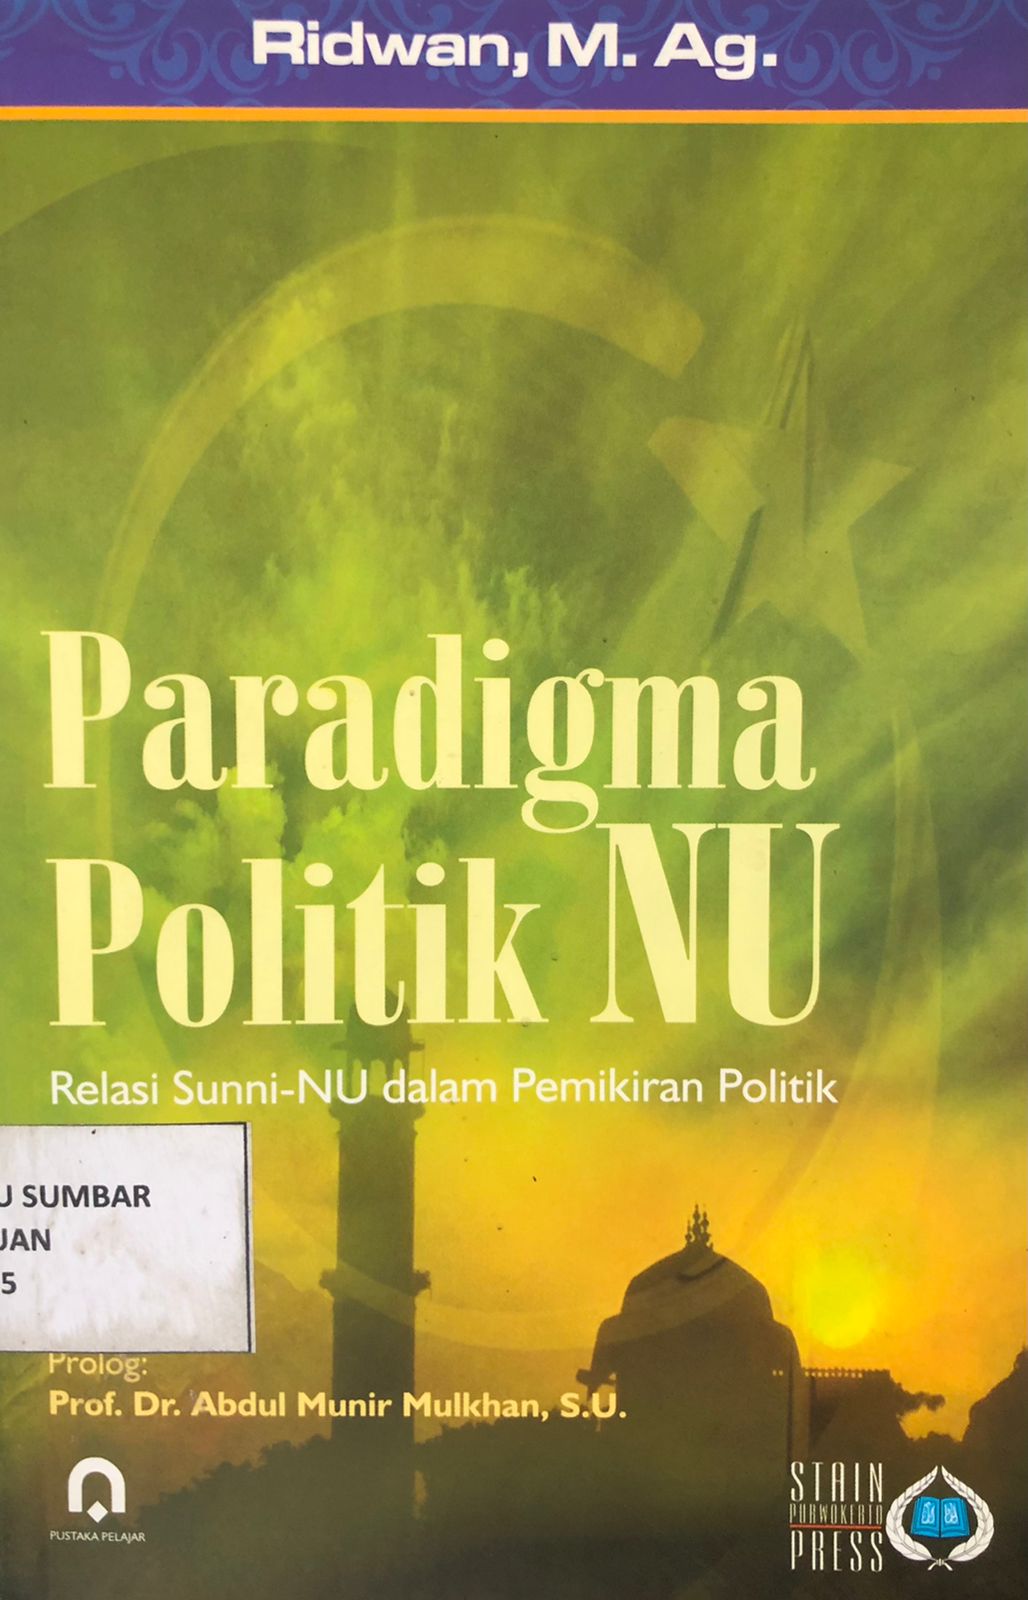 Paradigma Politik NU: Relasi Sunni-Nu Dalam Pemikiran Politik